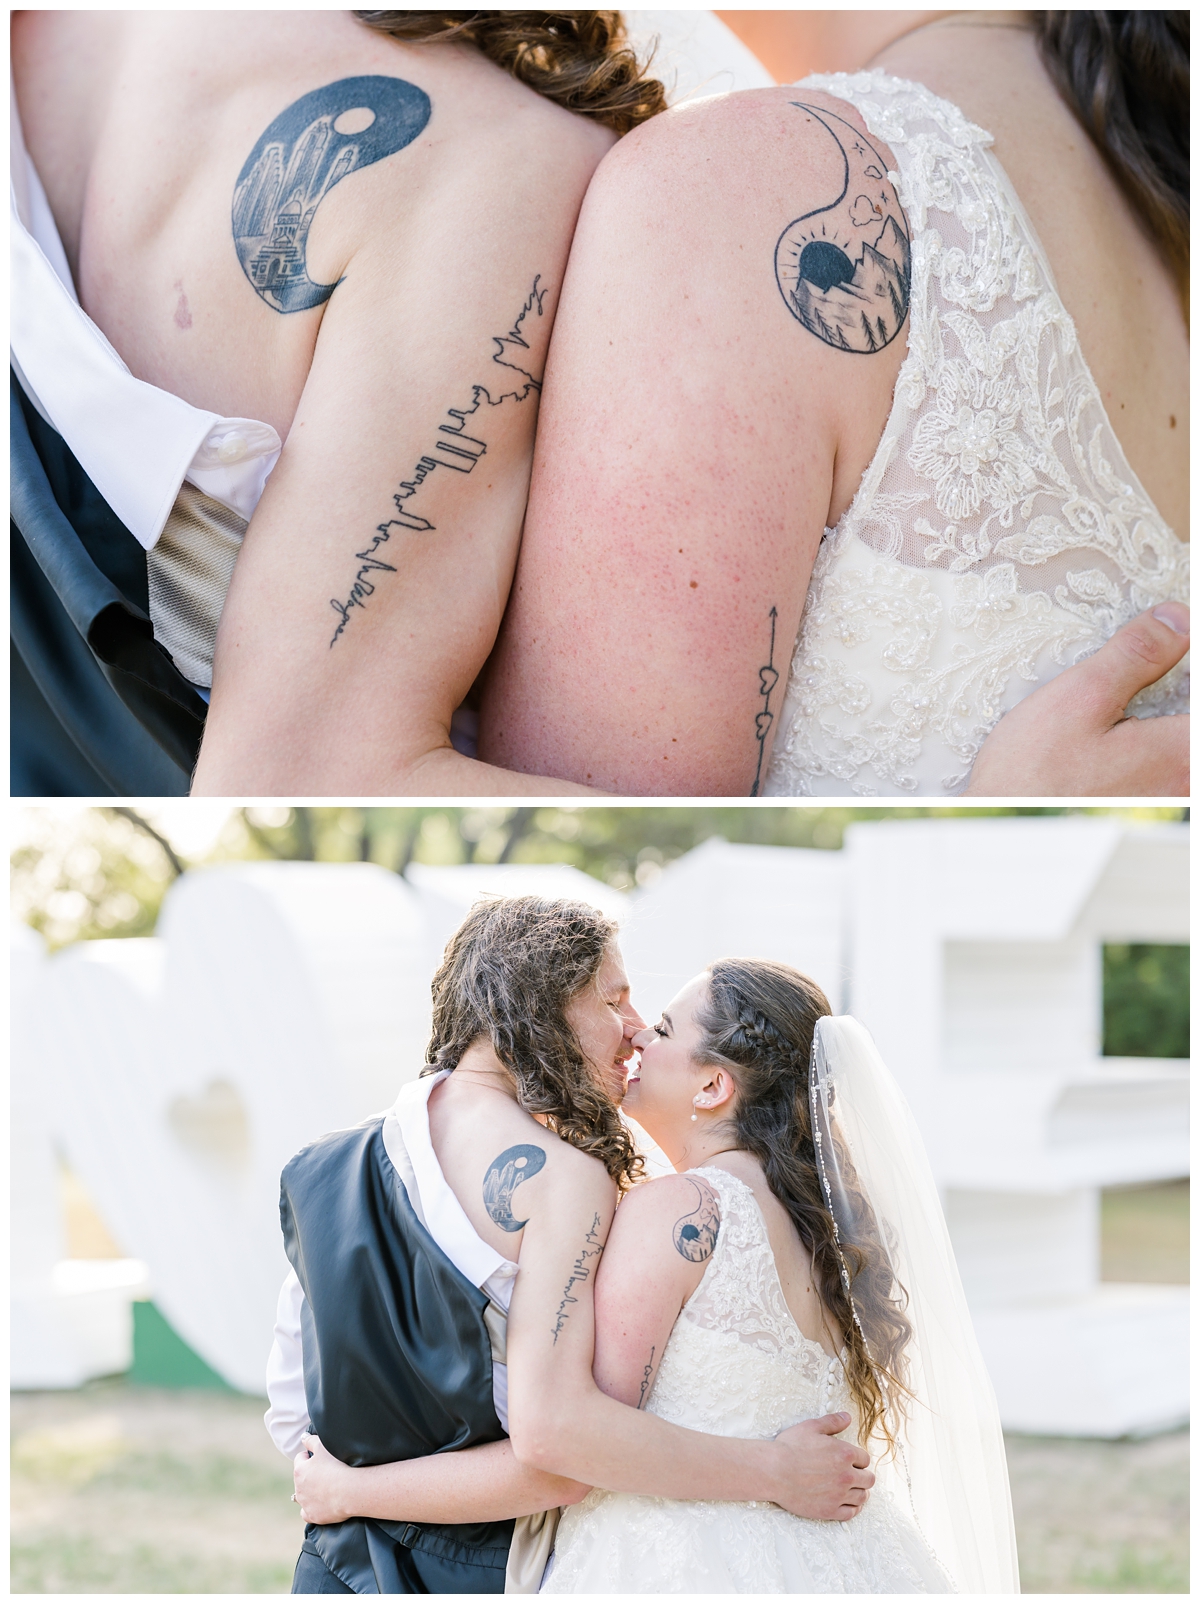 Wedding tattoos 